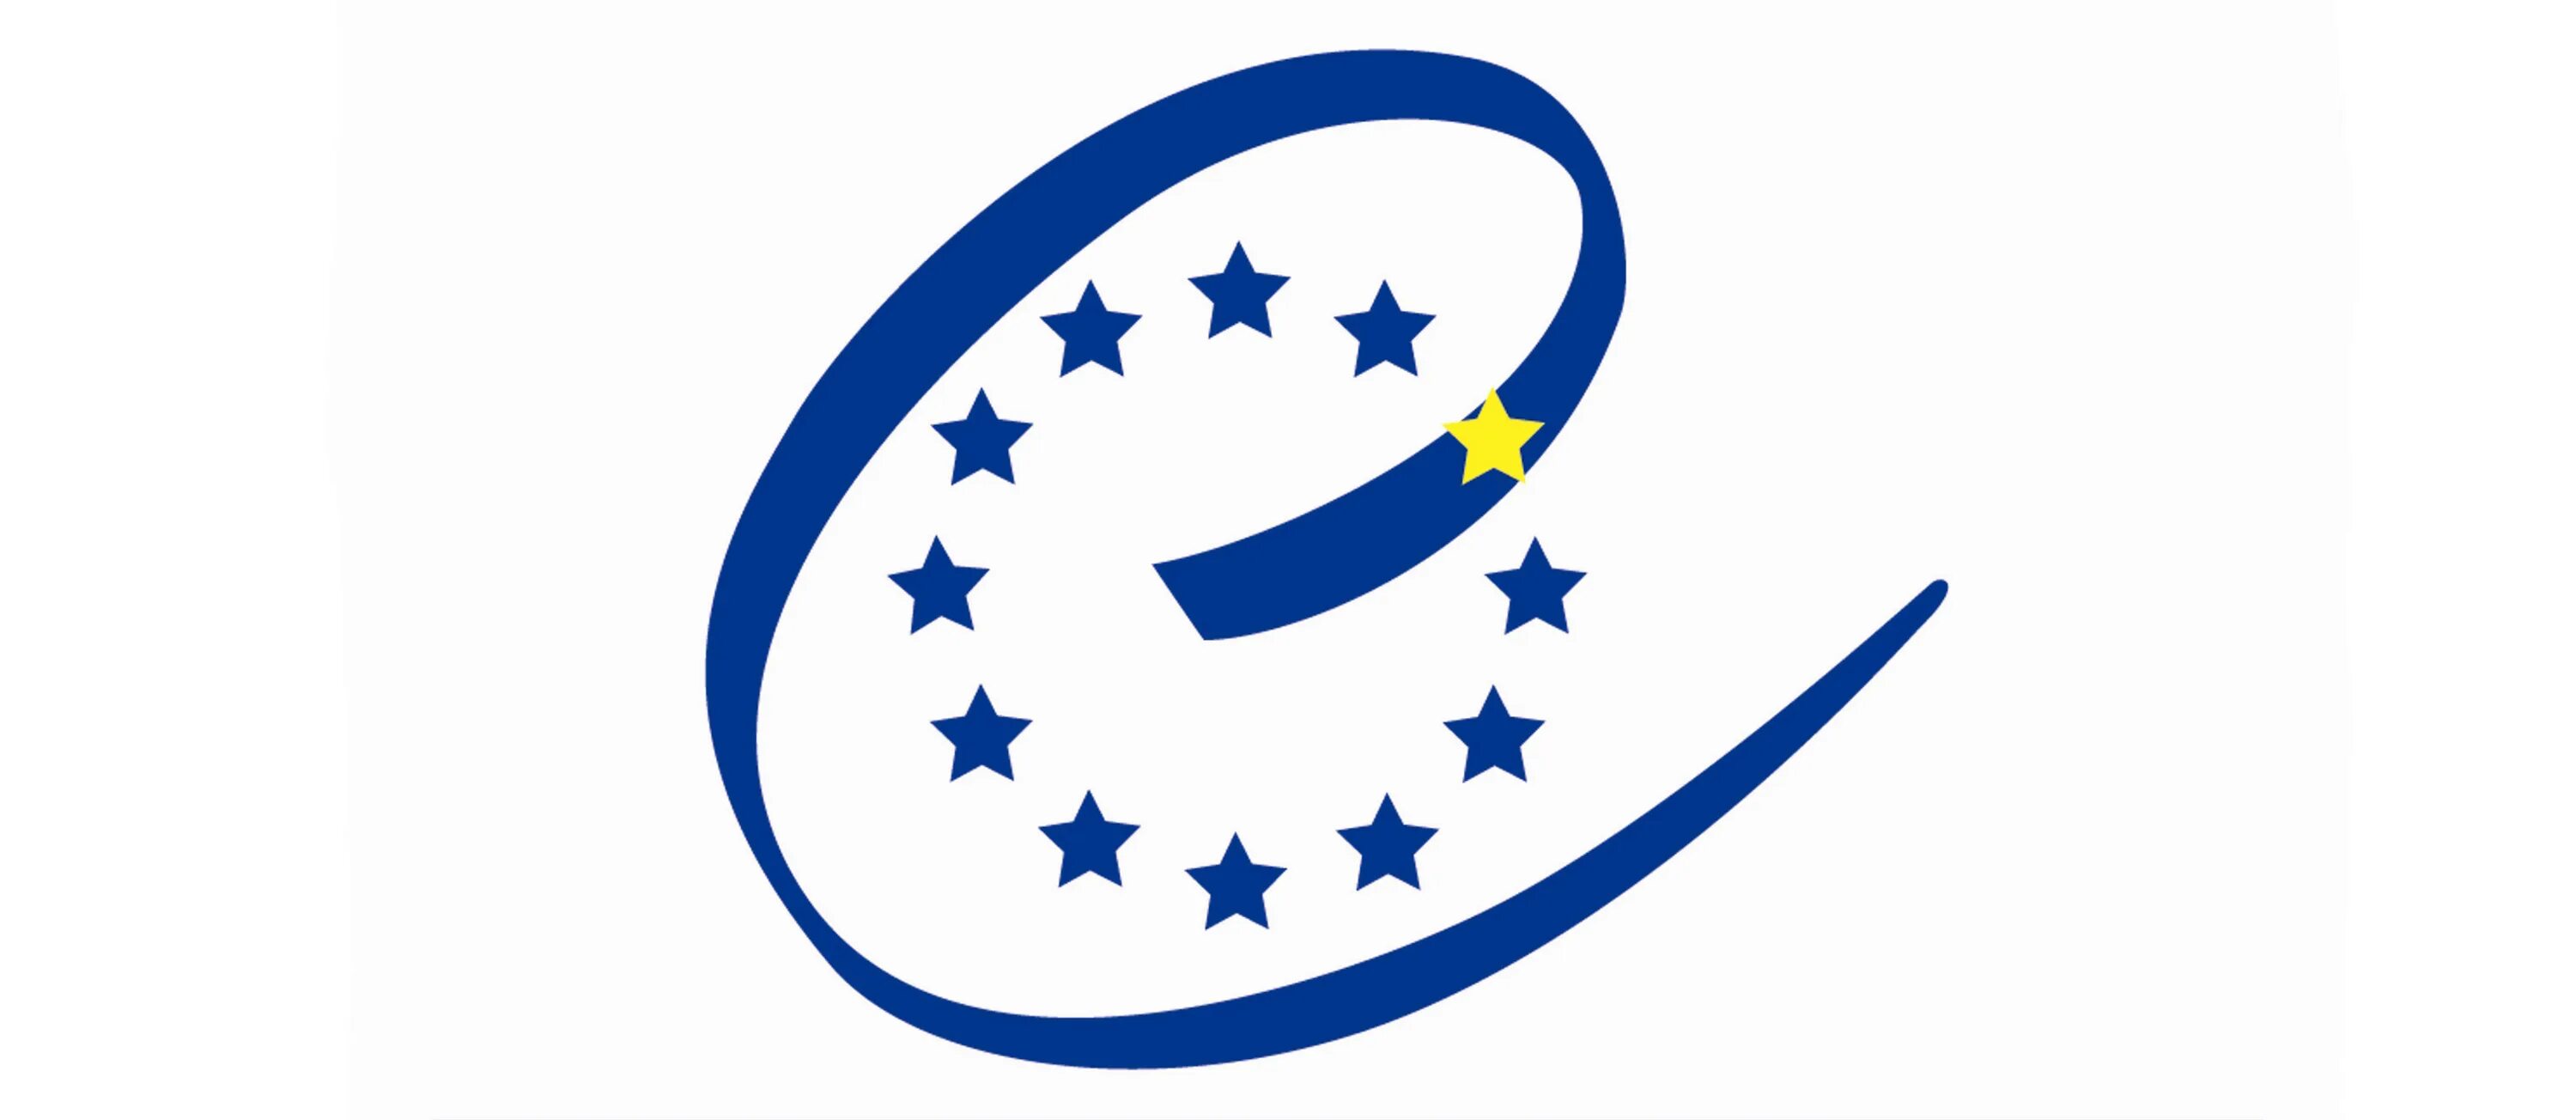 Eu council. Совет Европы эмблема. Совет Европы герб. Парламентская Ассамблея совета Европы лого. Совет Европы (се).